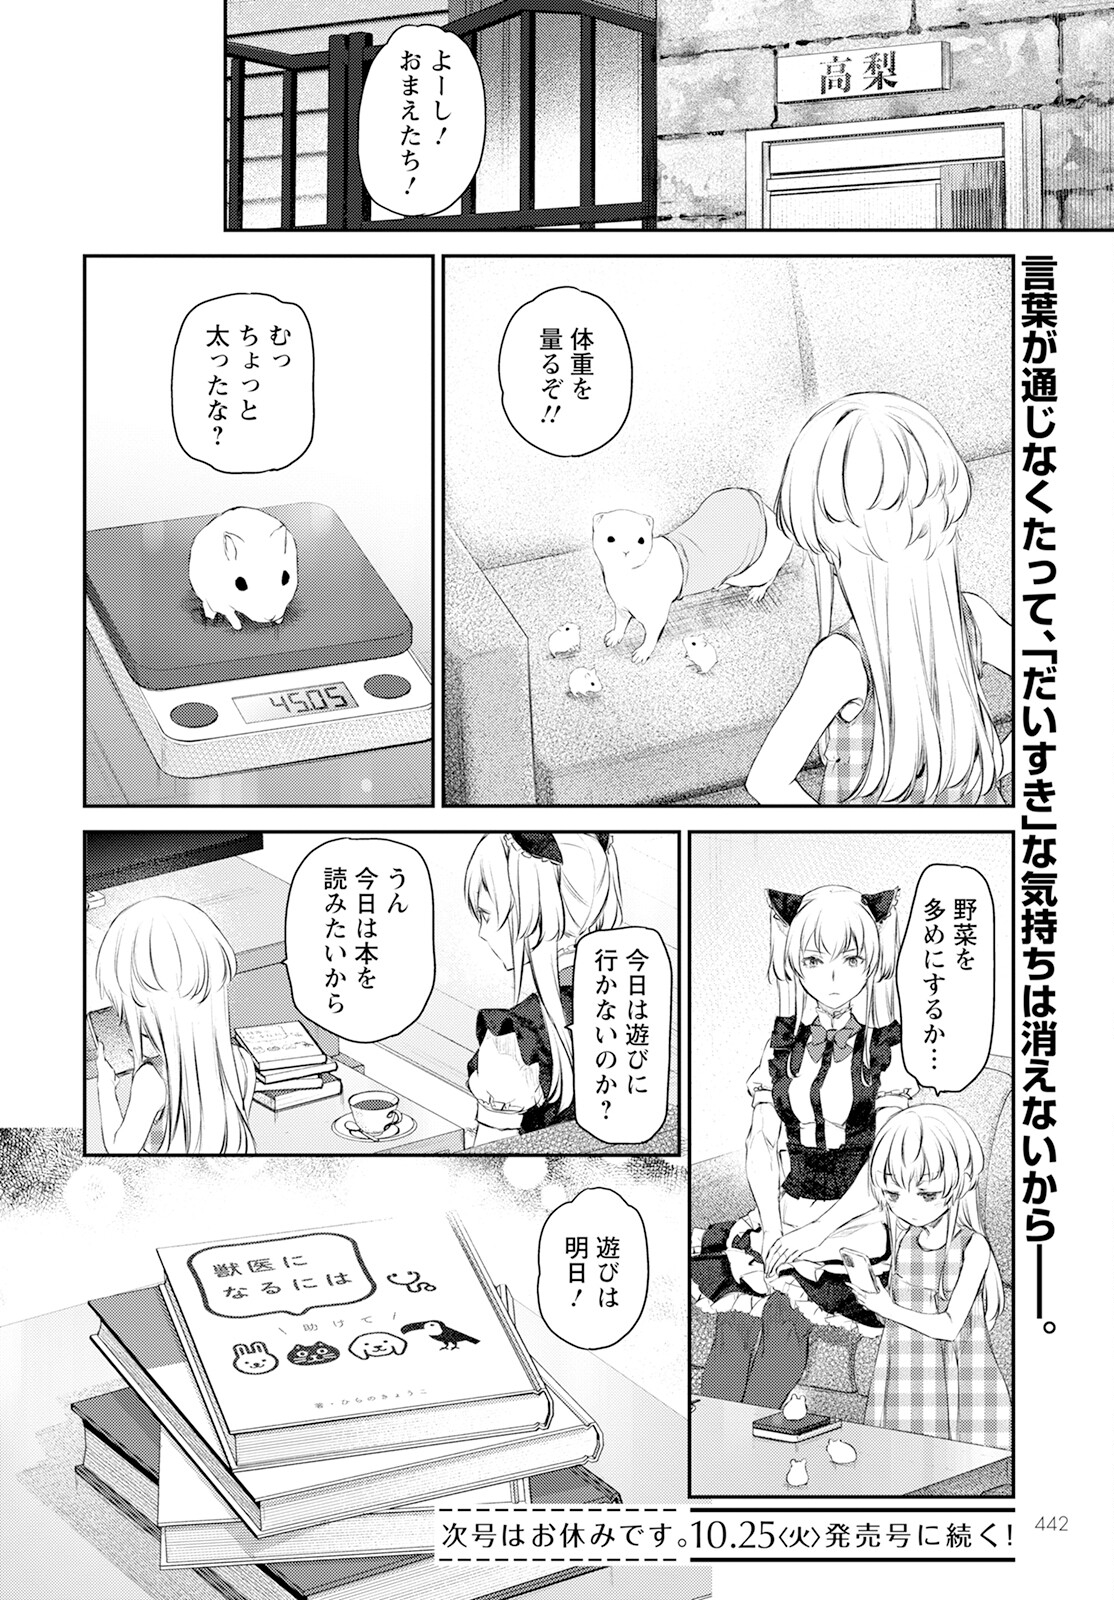 Uchi no Maid ga Uzasugiru! - Chapter 55 - Page 26